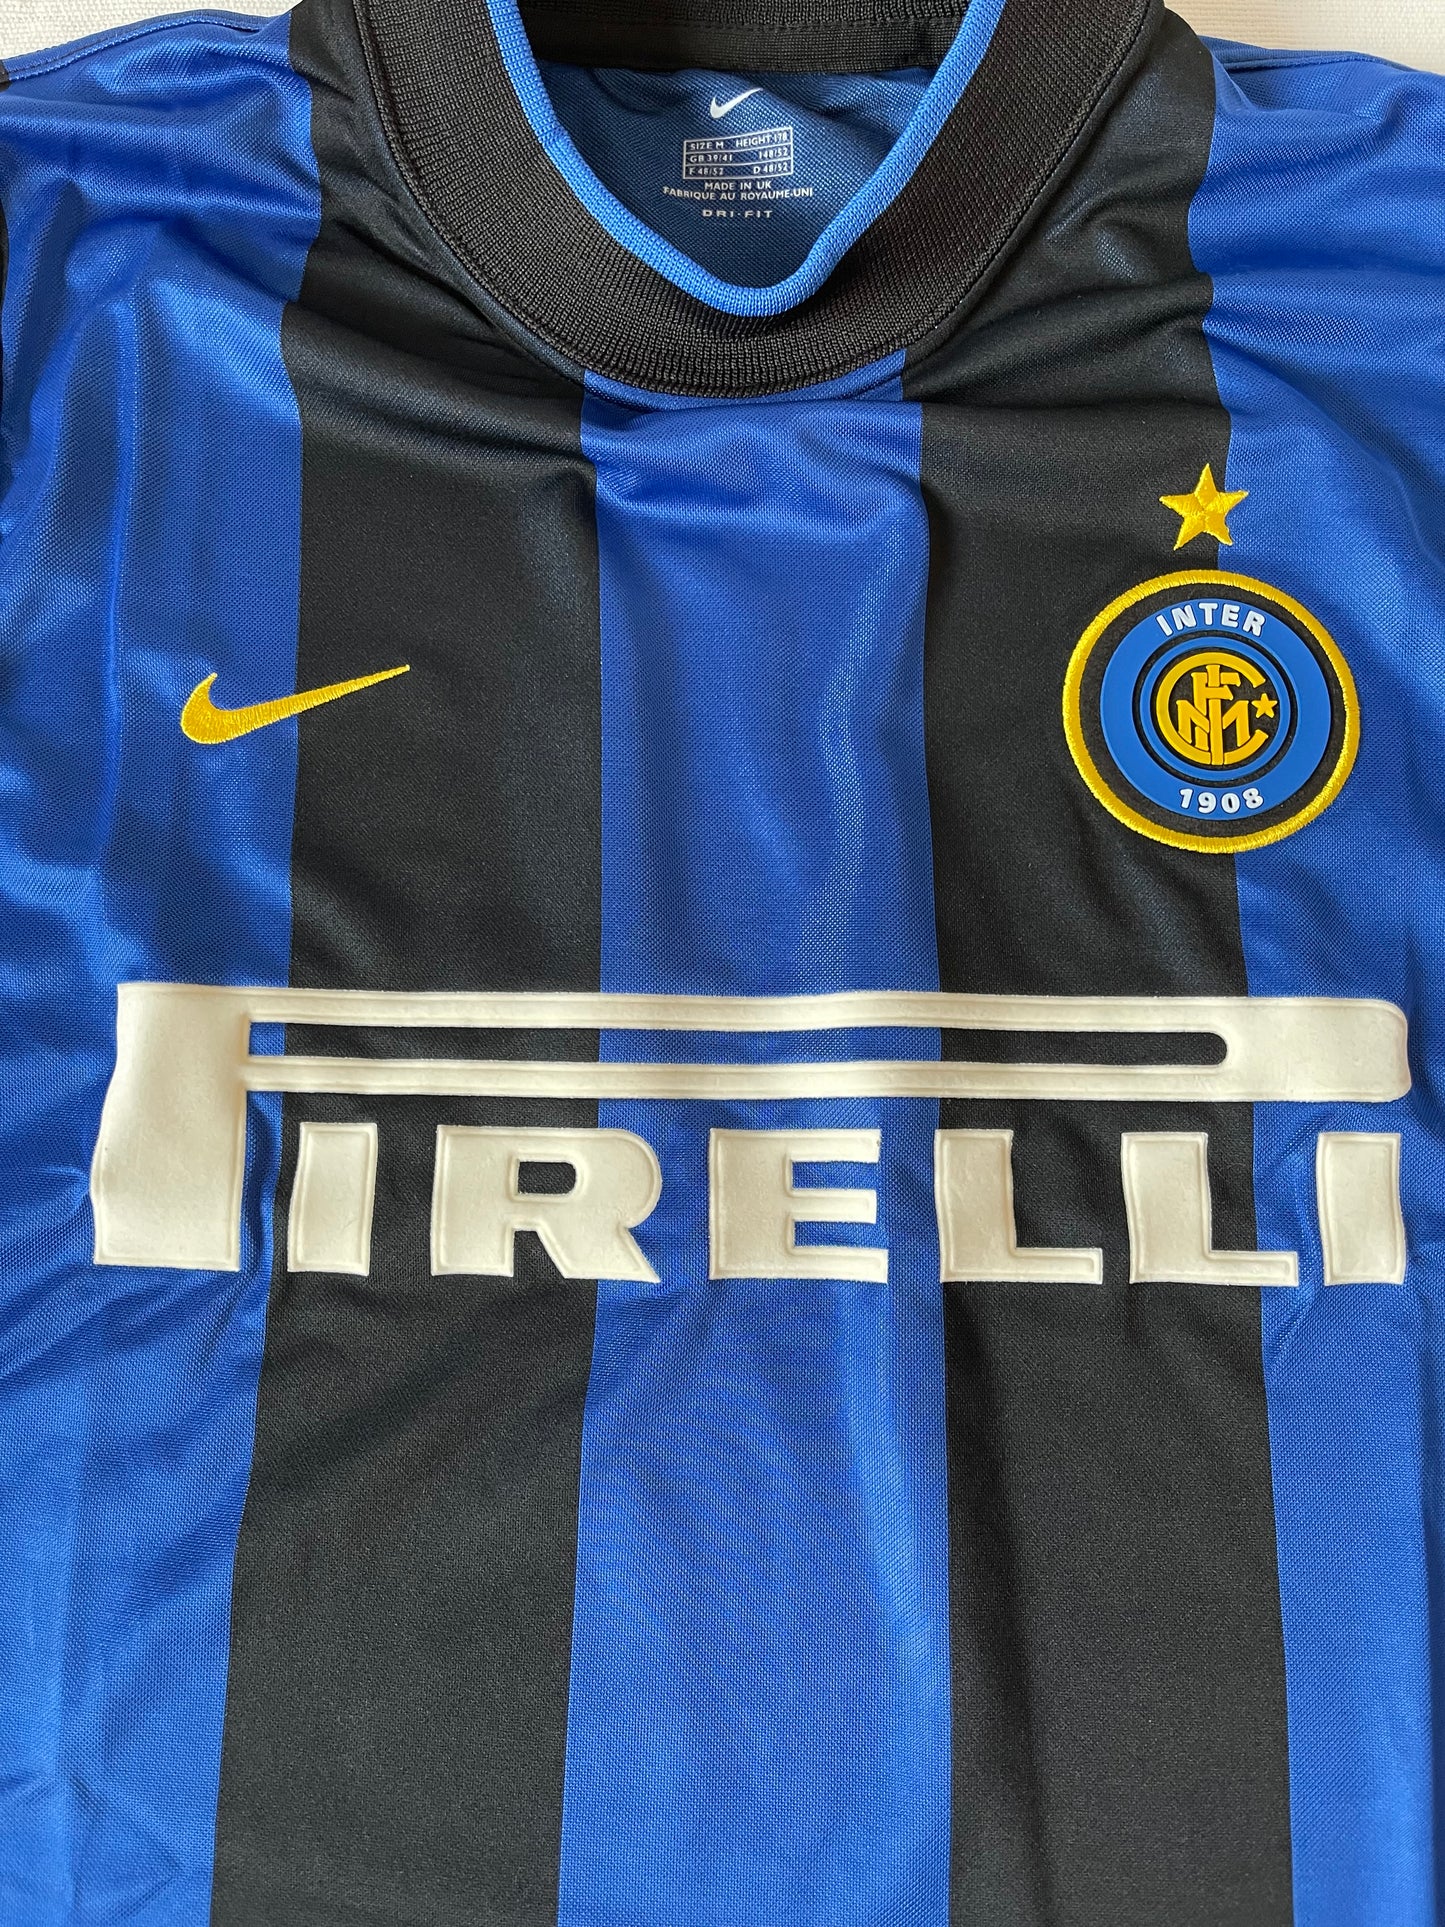 Inter Internazionale Milano Milan Nike Team 2000-2001 Home Football Shirt Black Blue Pirelli Size M Made in UK BNWT DRI-FIT